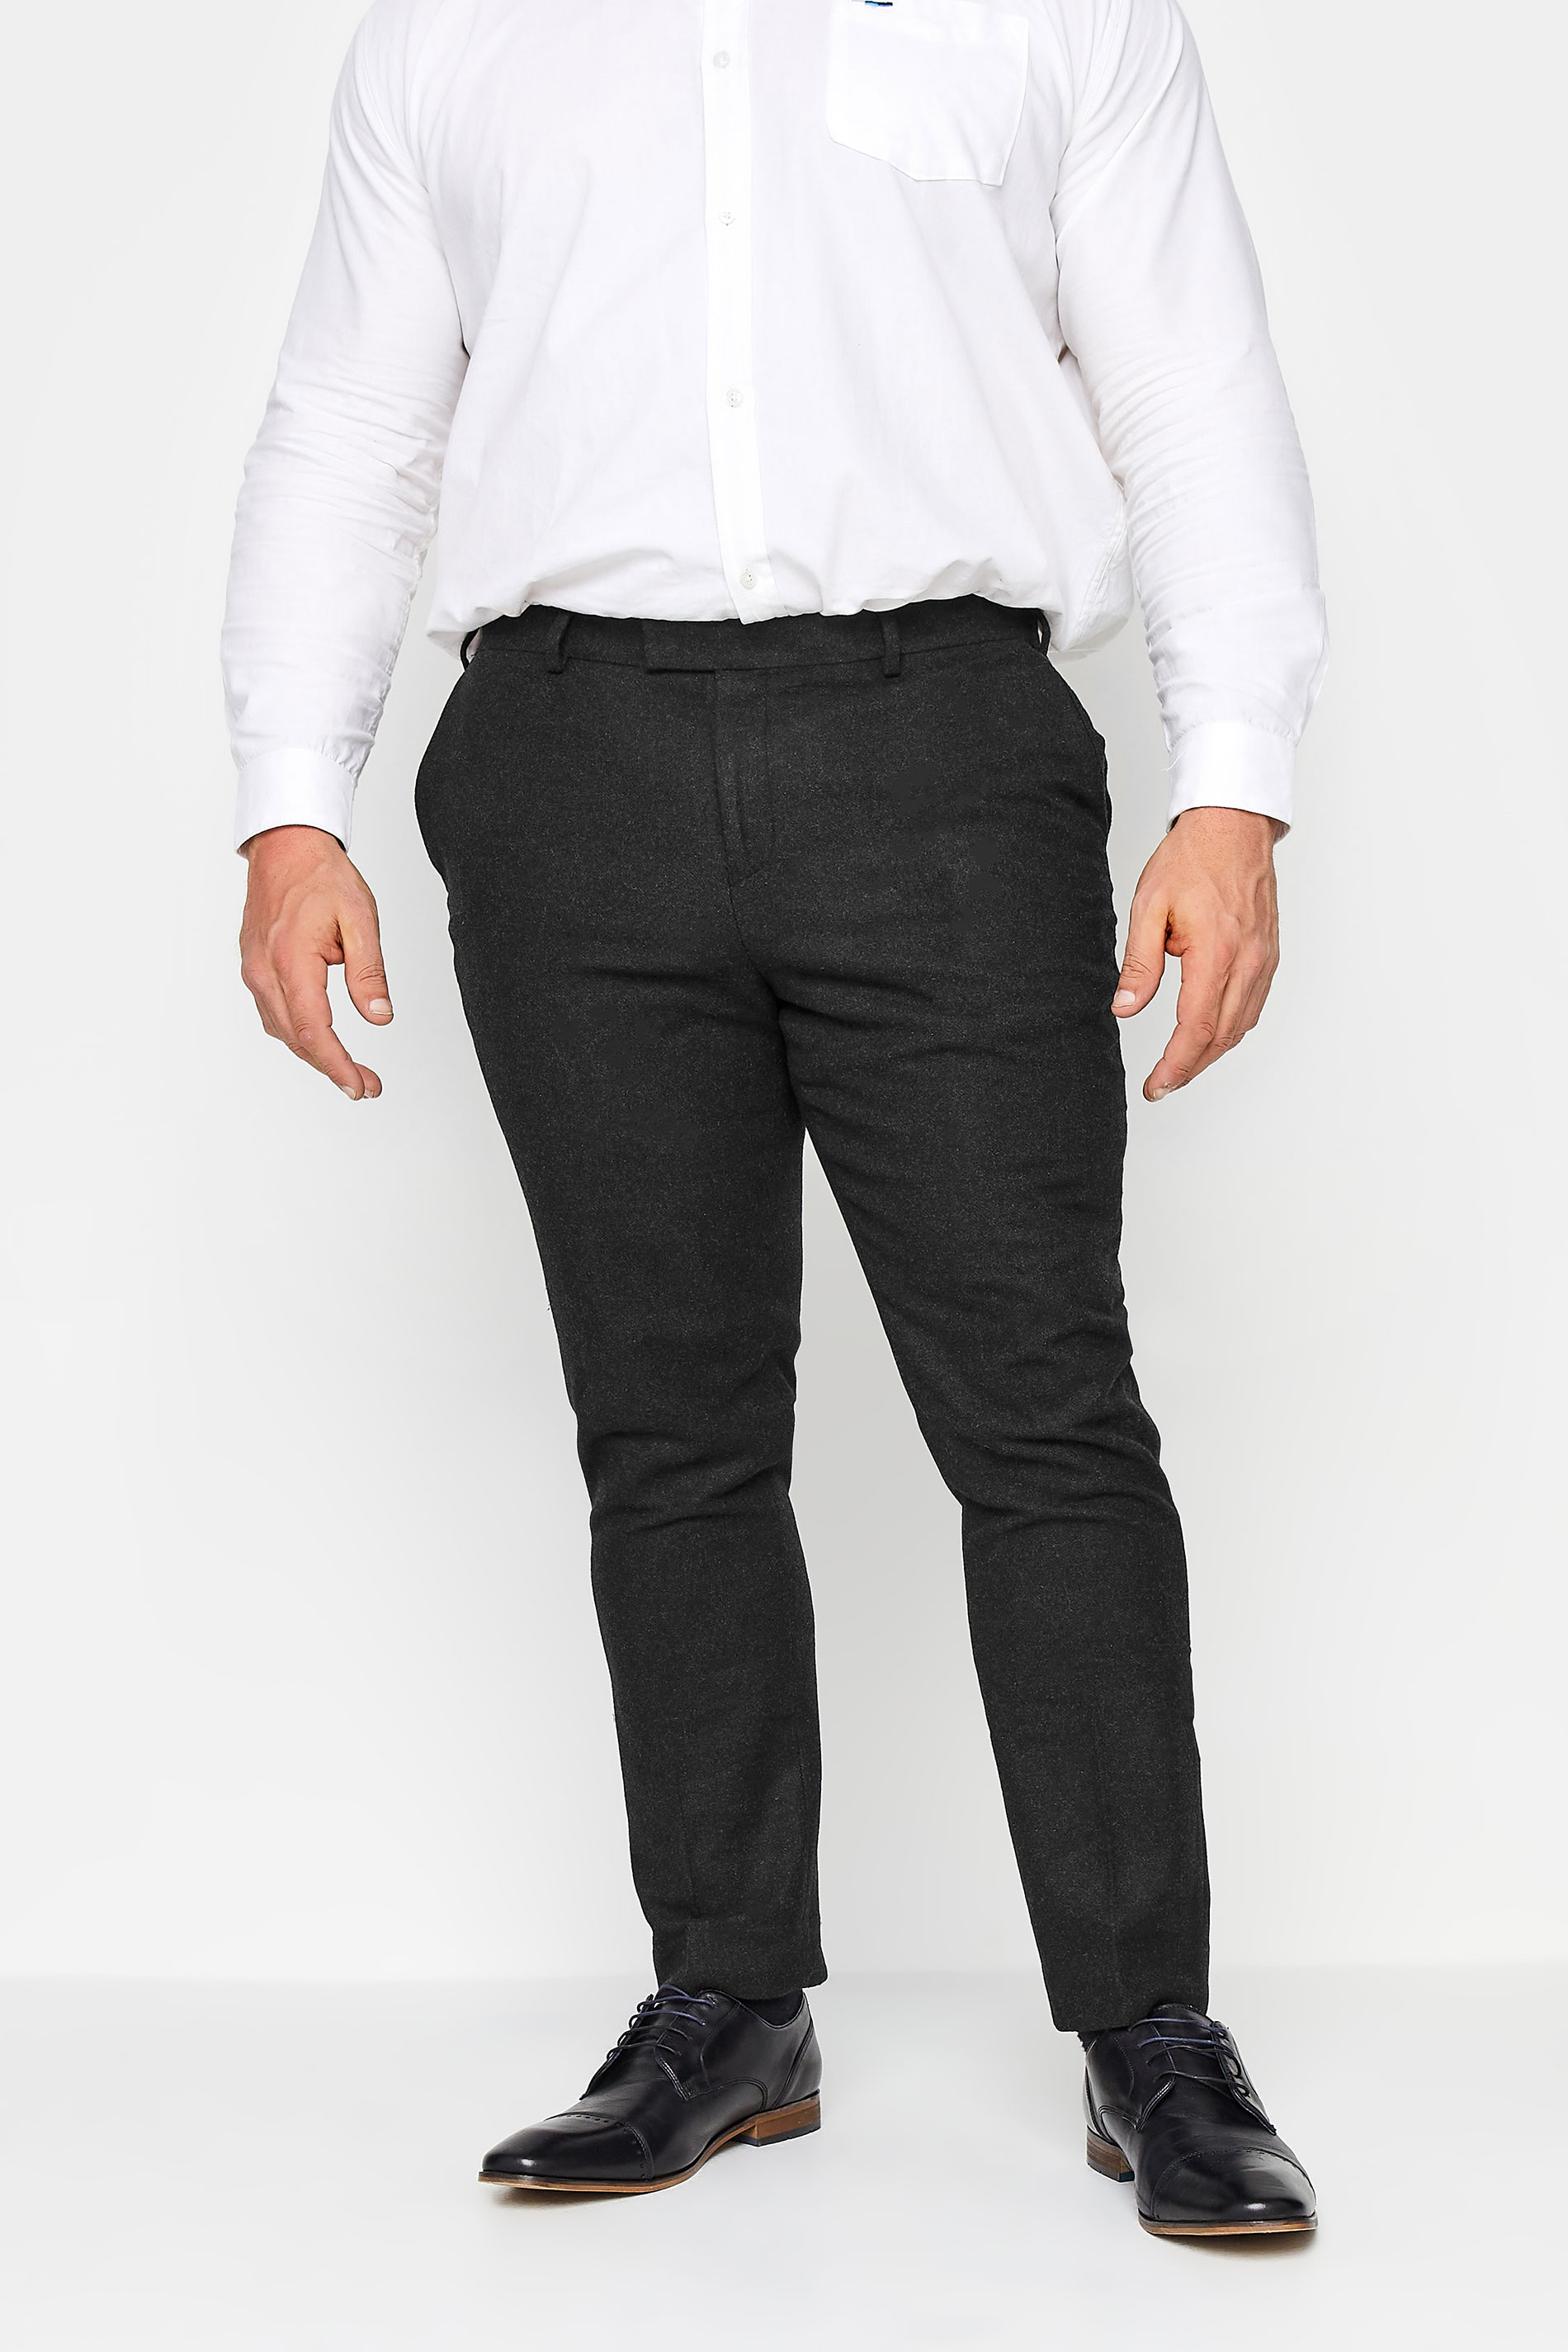 BadRhino Big & Tall Grey Tweed Suit Trousers | BadRhino 2